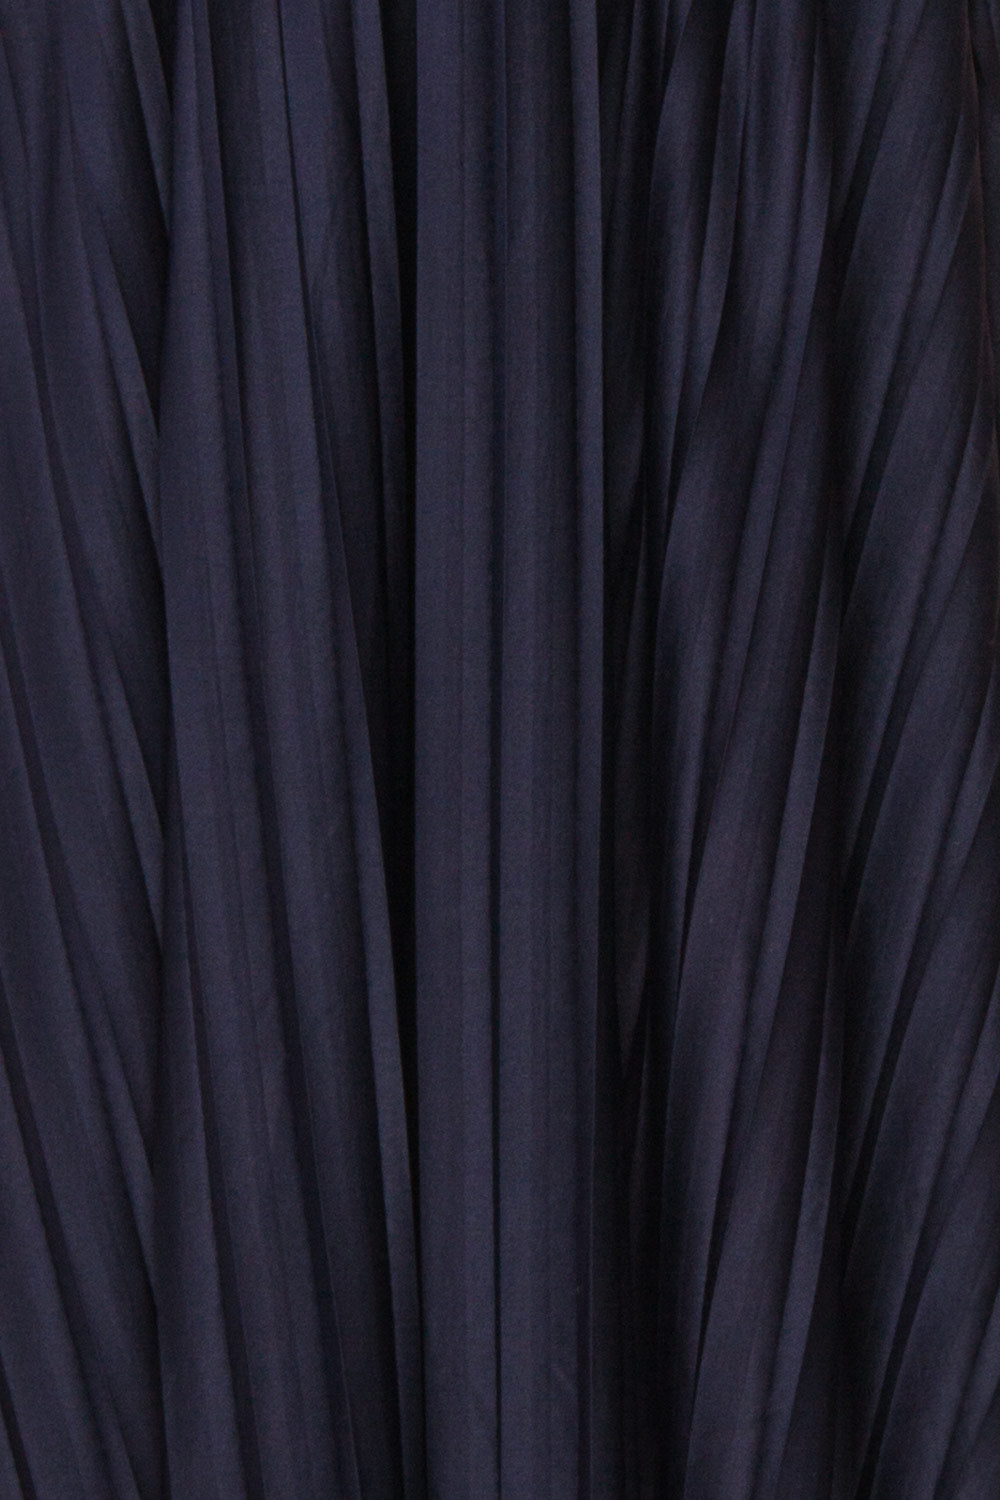 Marly Rain Navy Blue Sleeveless A-Line Dress | Boutique 1861 fabric 